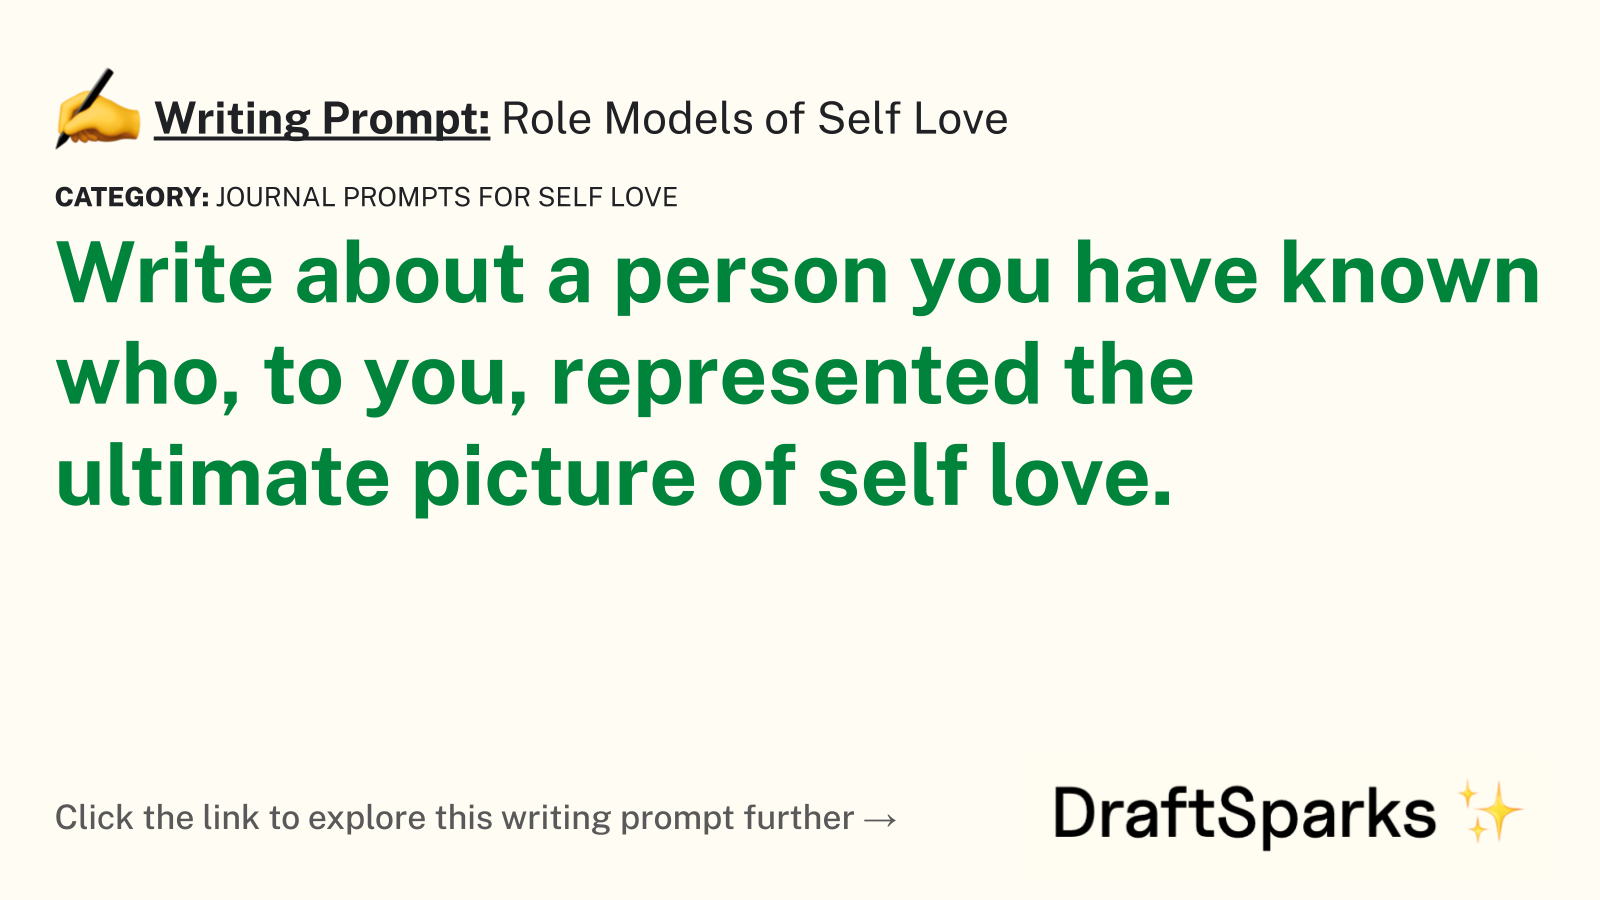 Role Models of Self Love